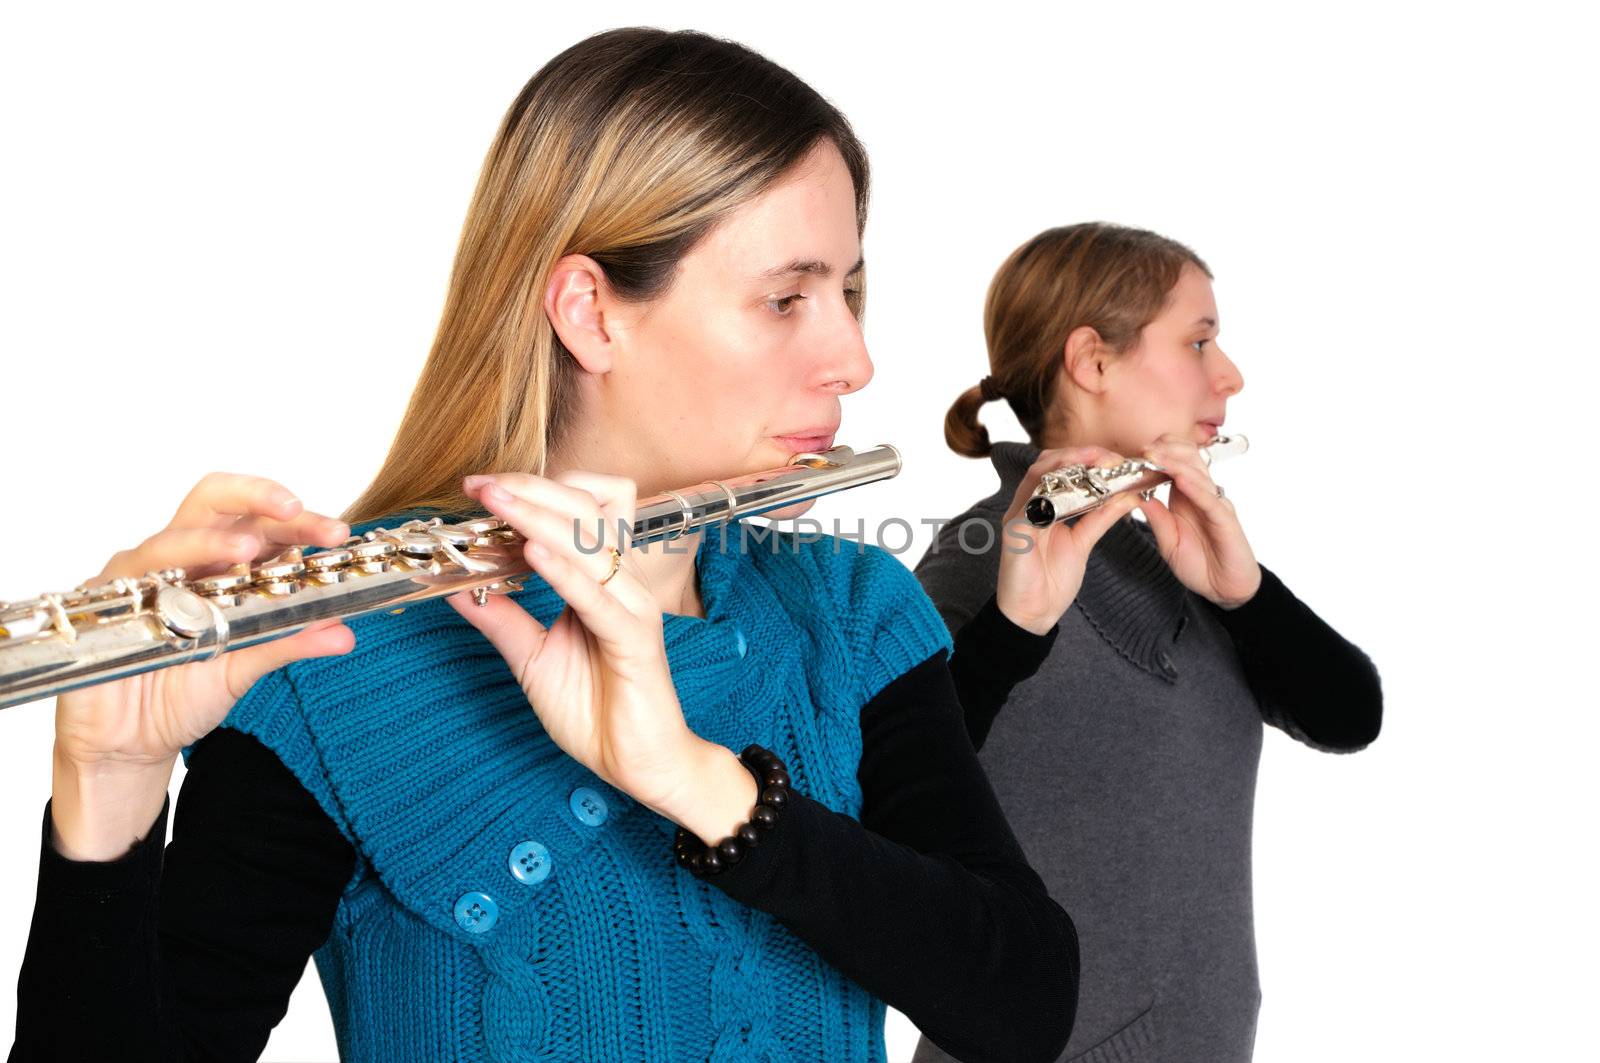 Transverse flute by fahrner